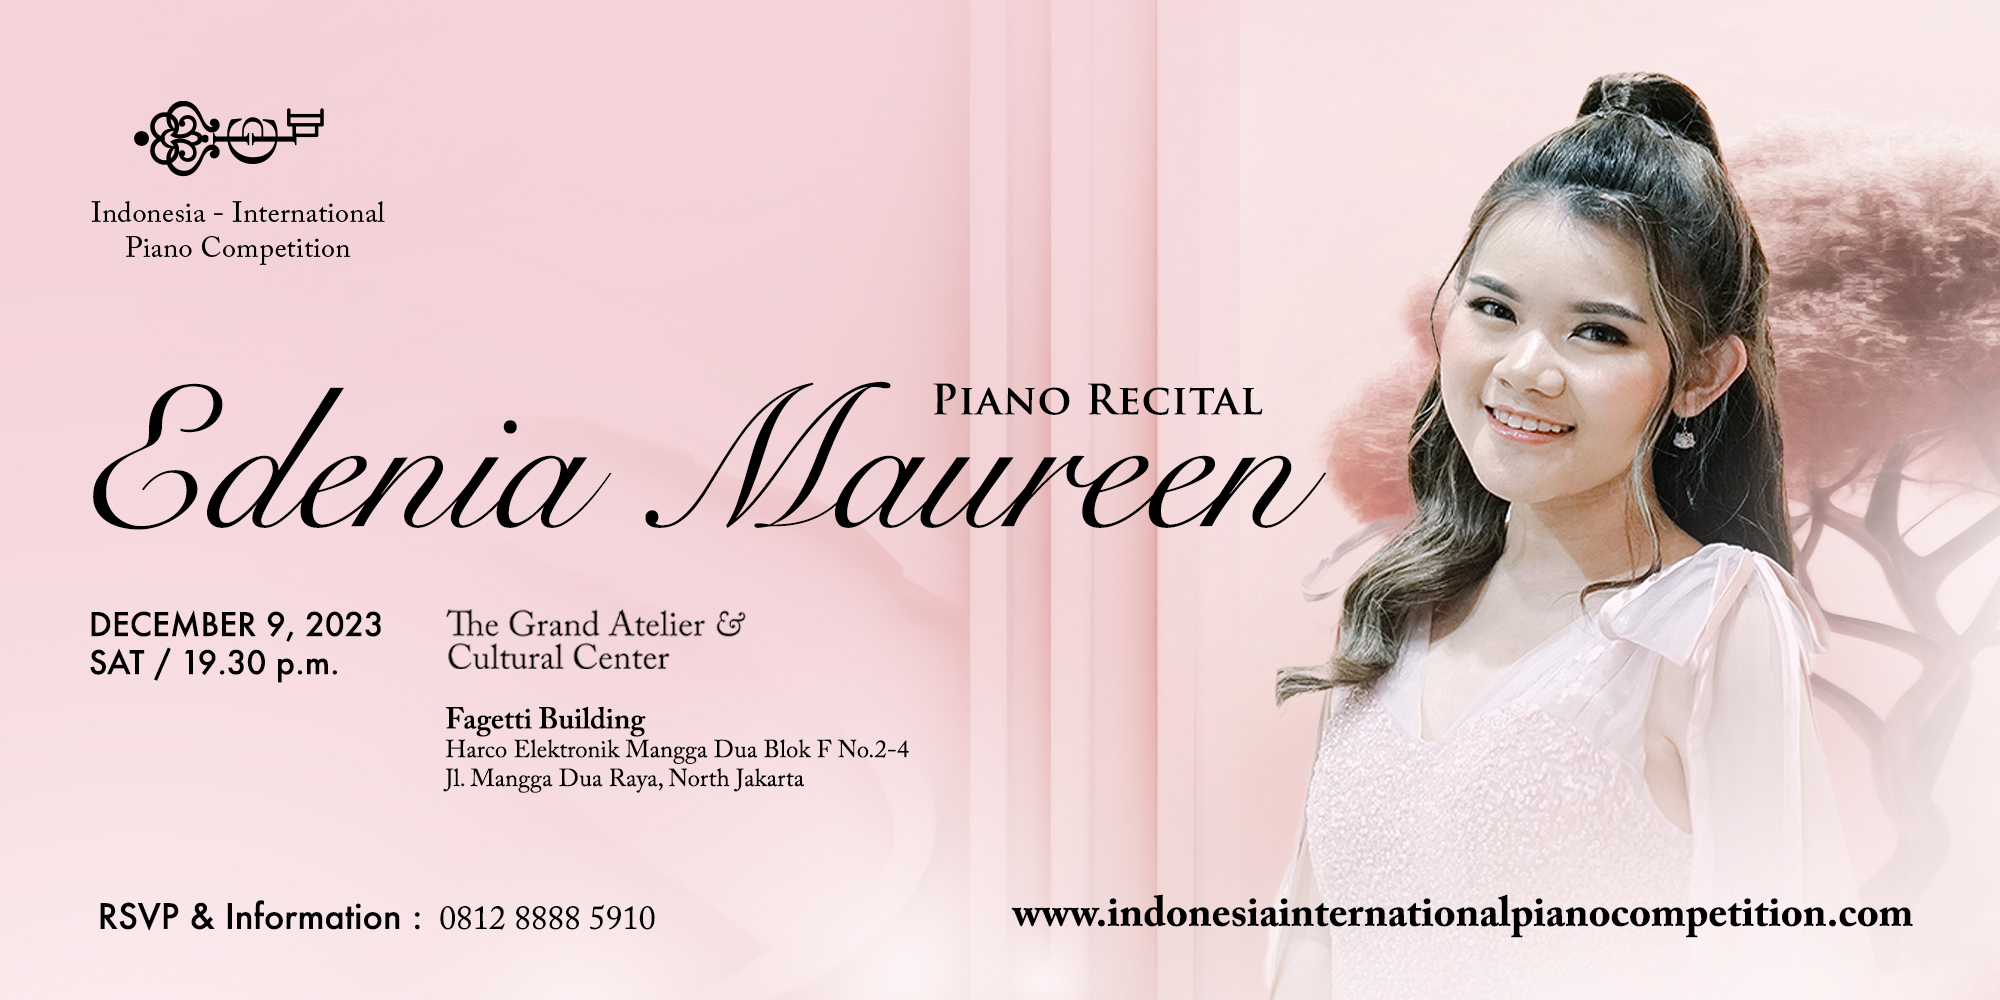 Piano Recital by Edenia Maureen